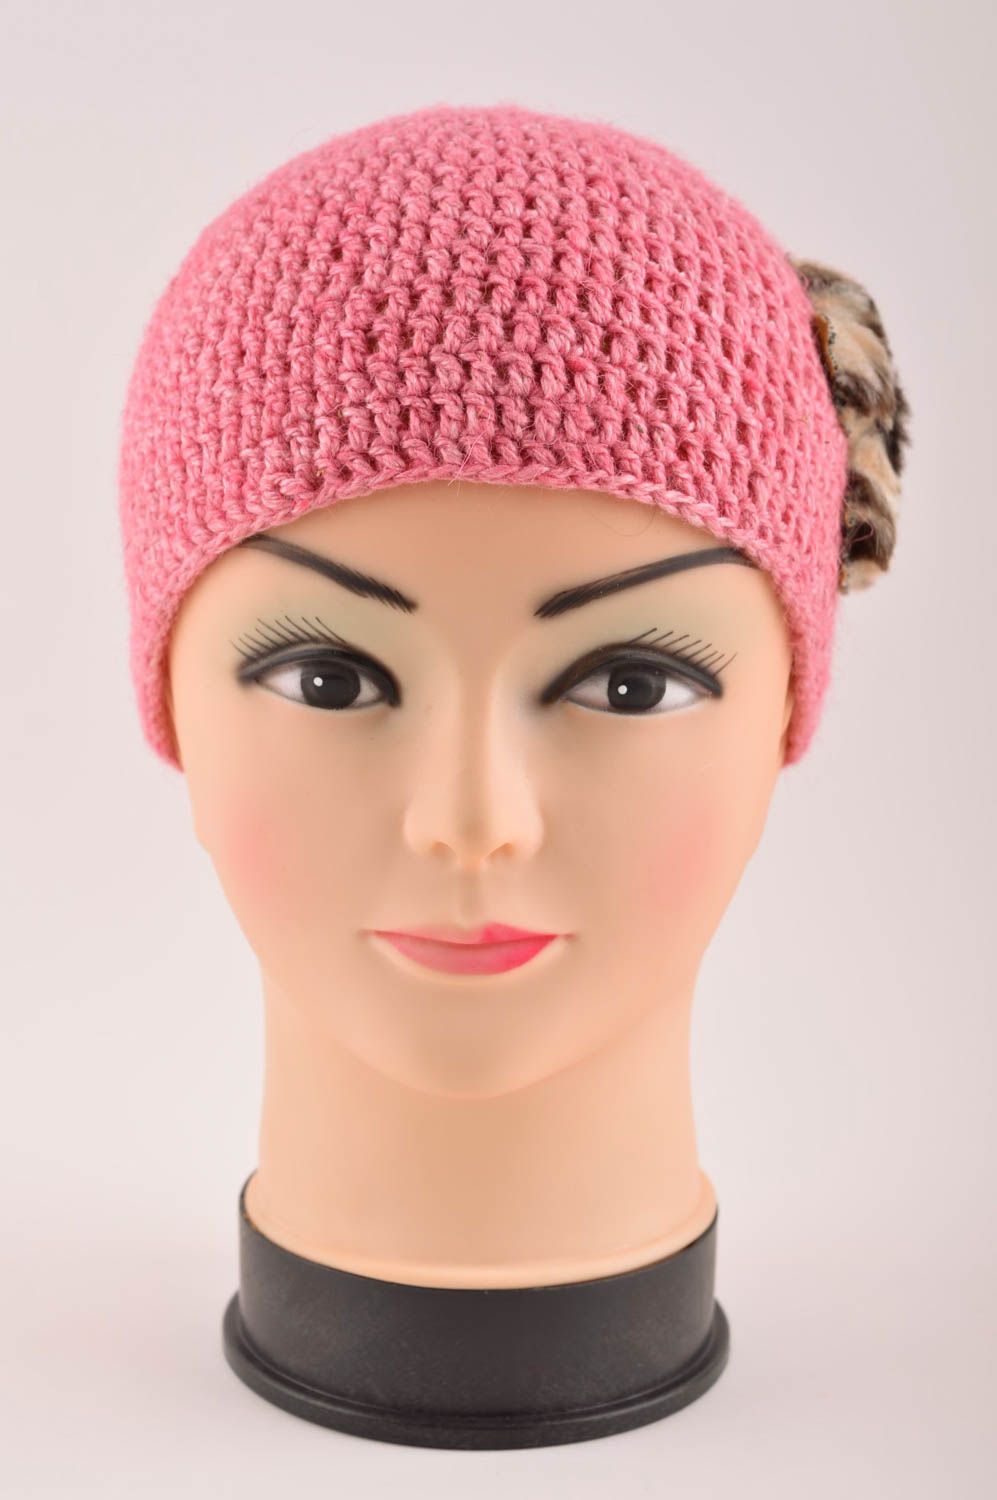 Handmade warm hat designer hat for baby unusual funny hat crocheted hat photo 4